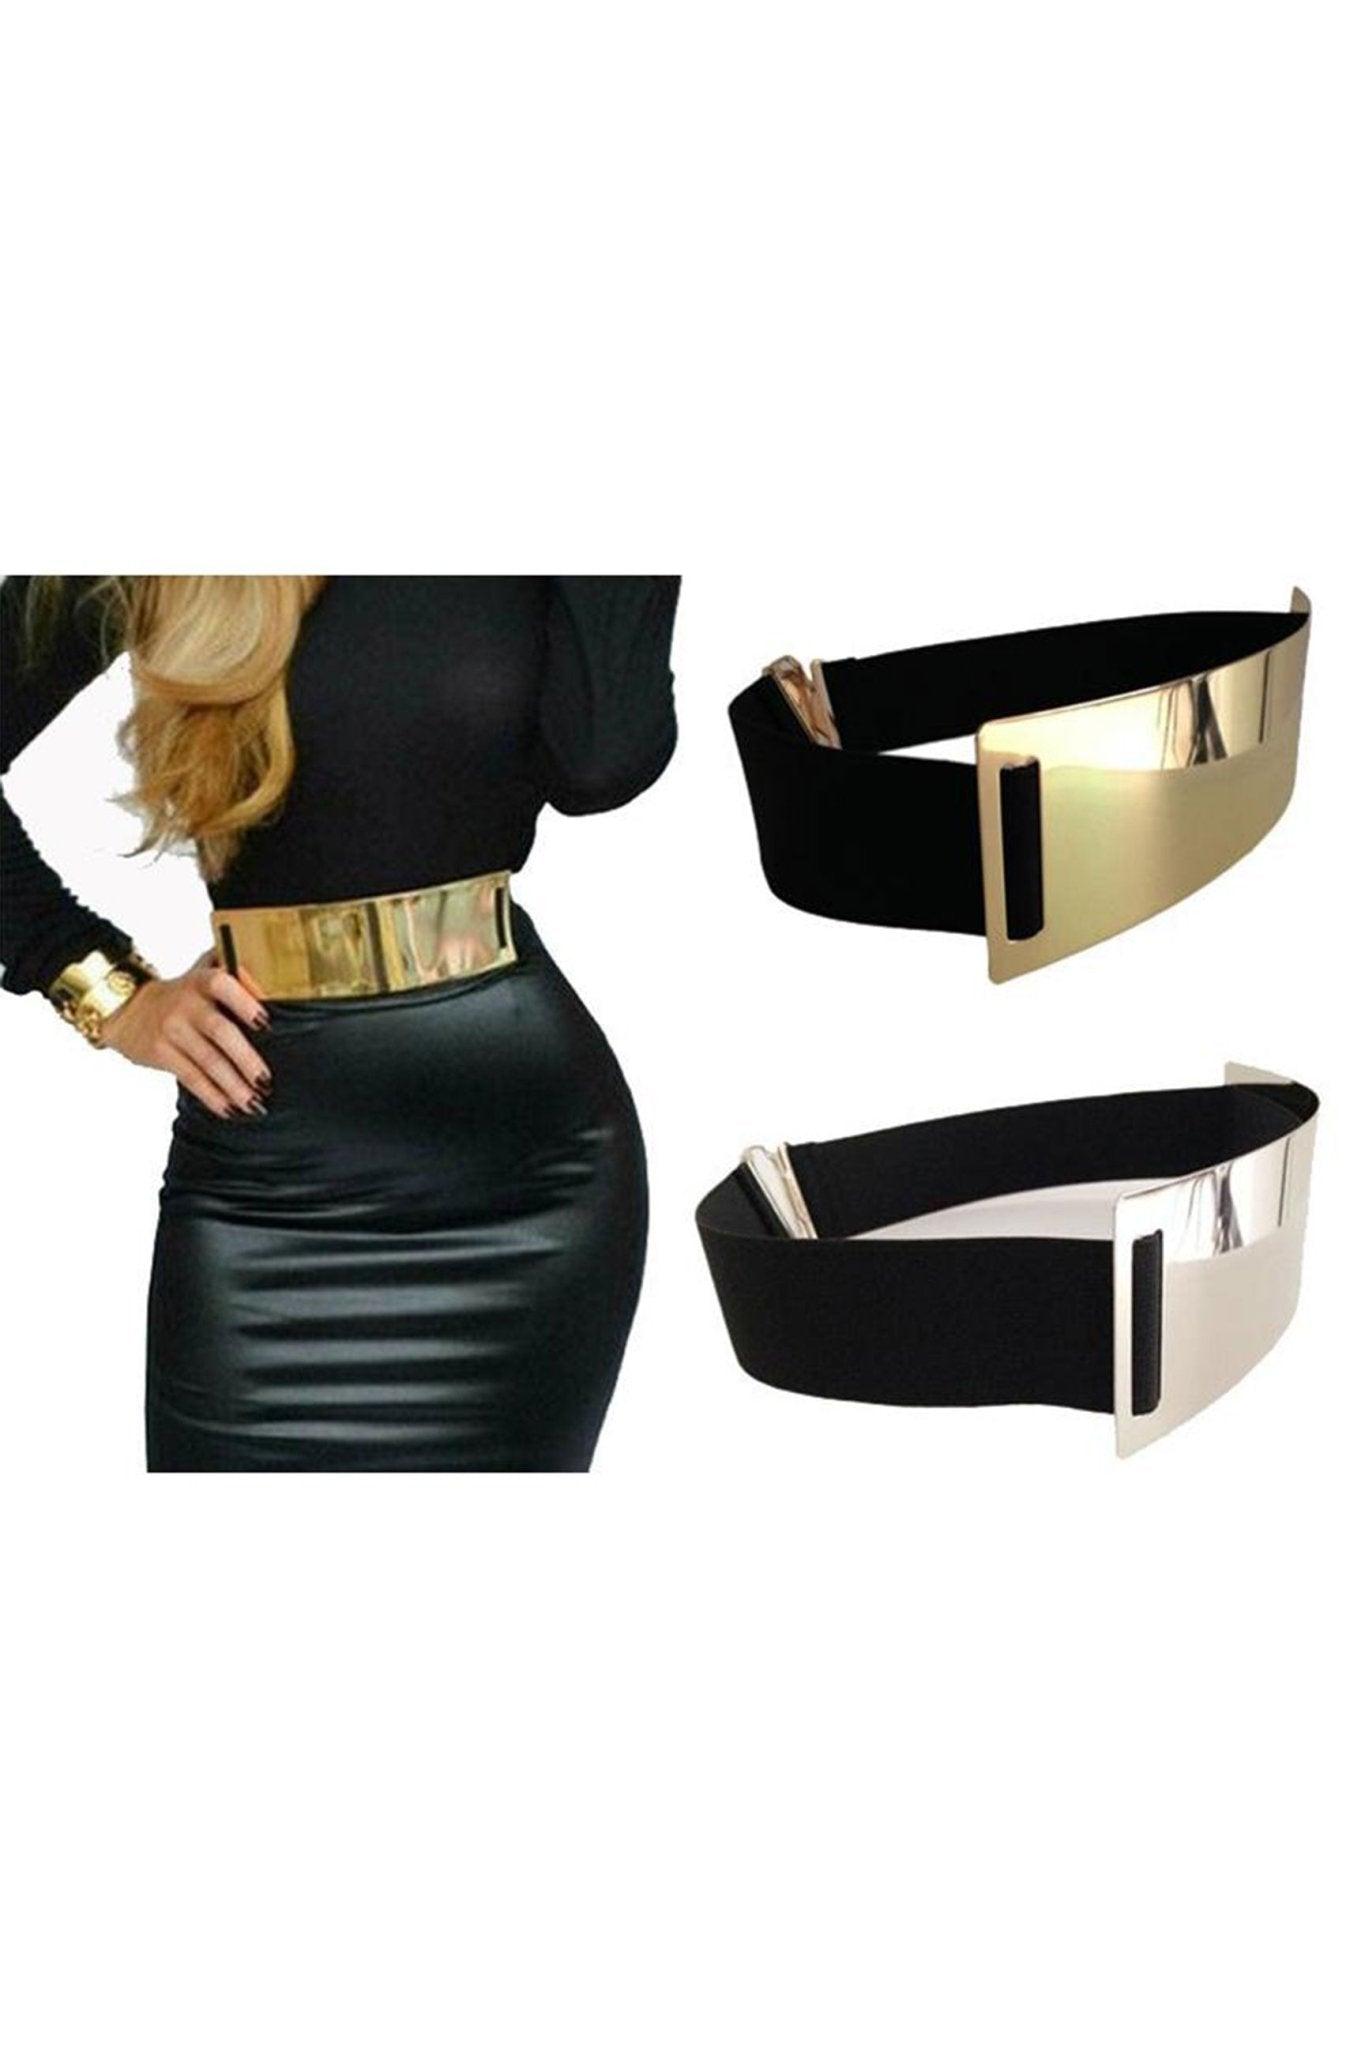 Classy Gold Silver Elastic Belt - MY SEXY STYLES